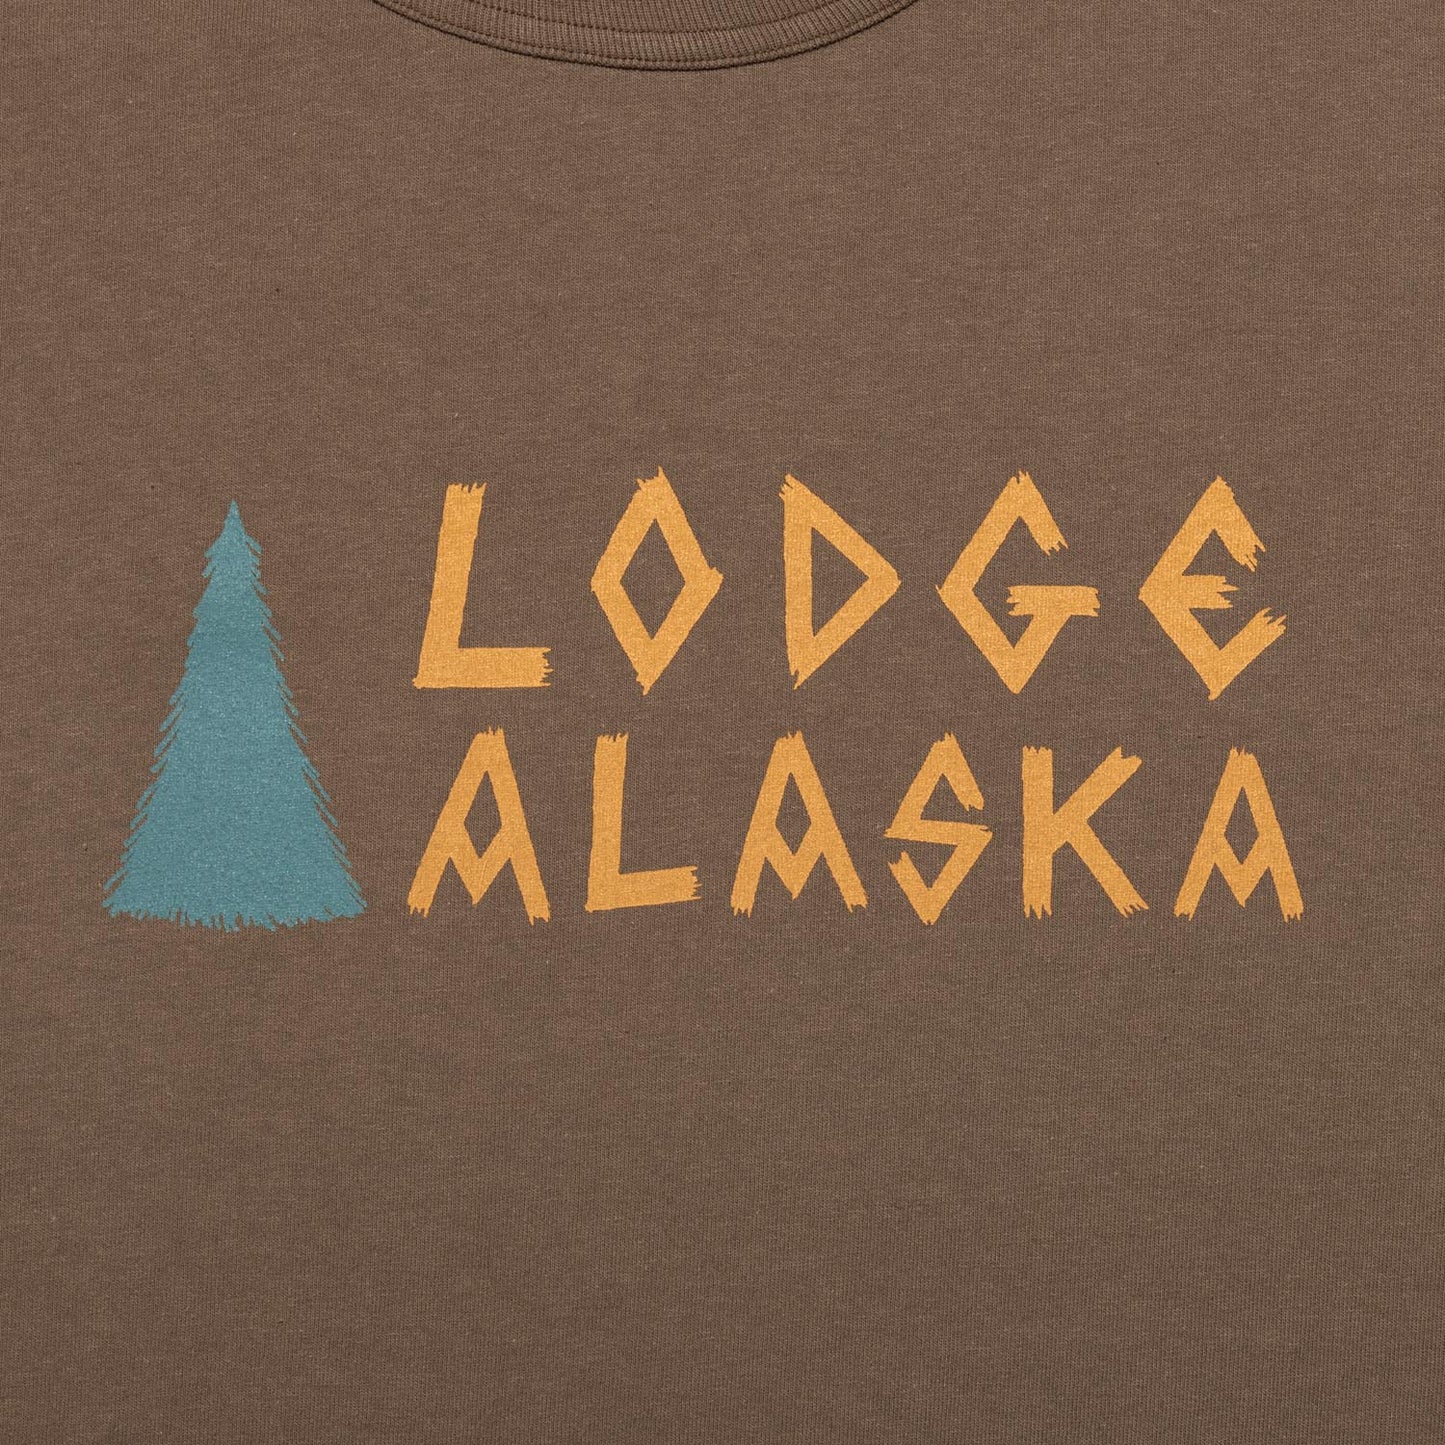 "LOGE ALASKA LOGO / designed by MATT LEINES"